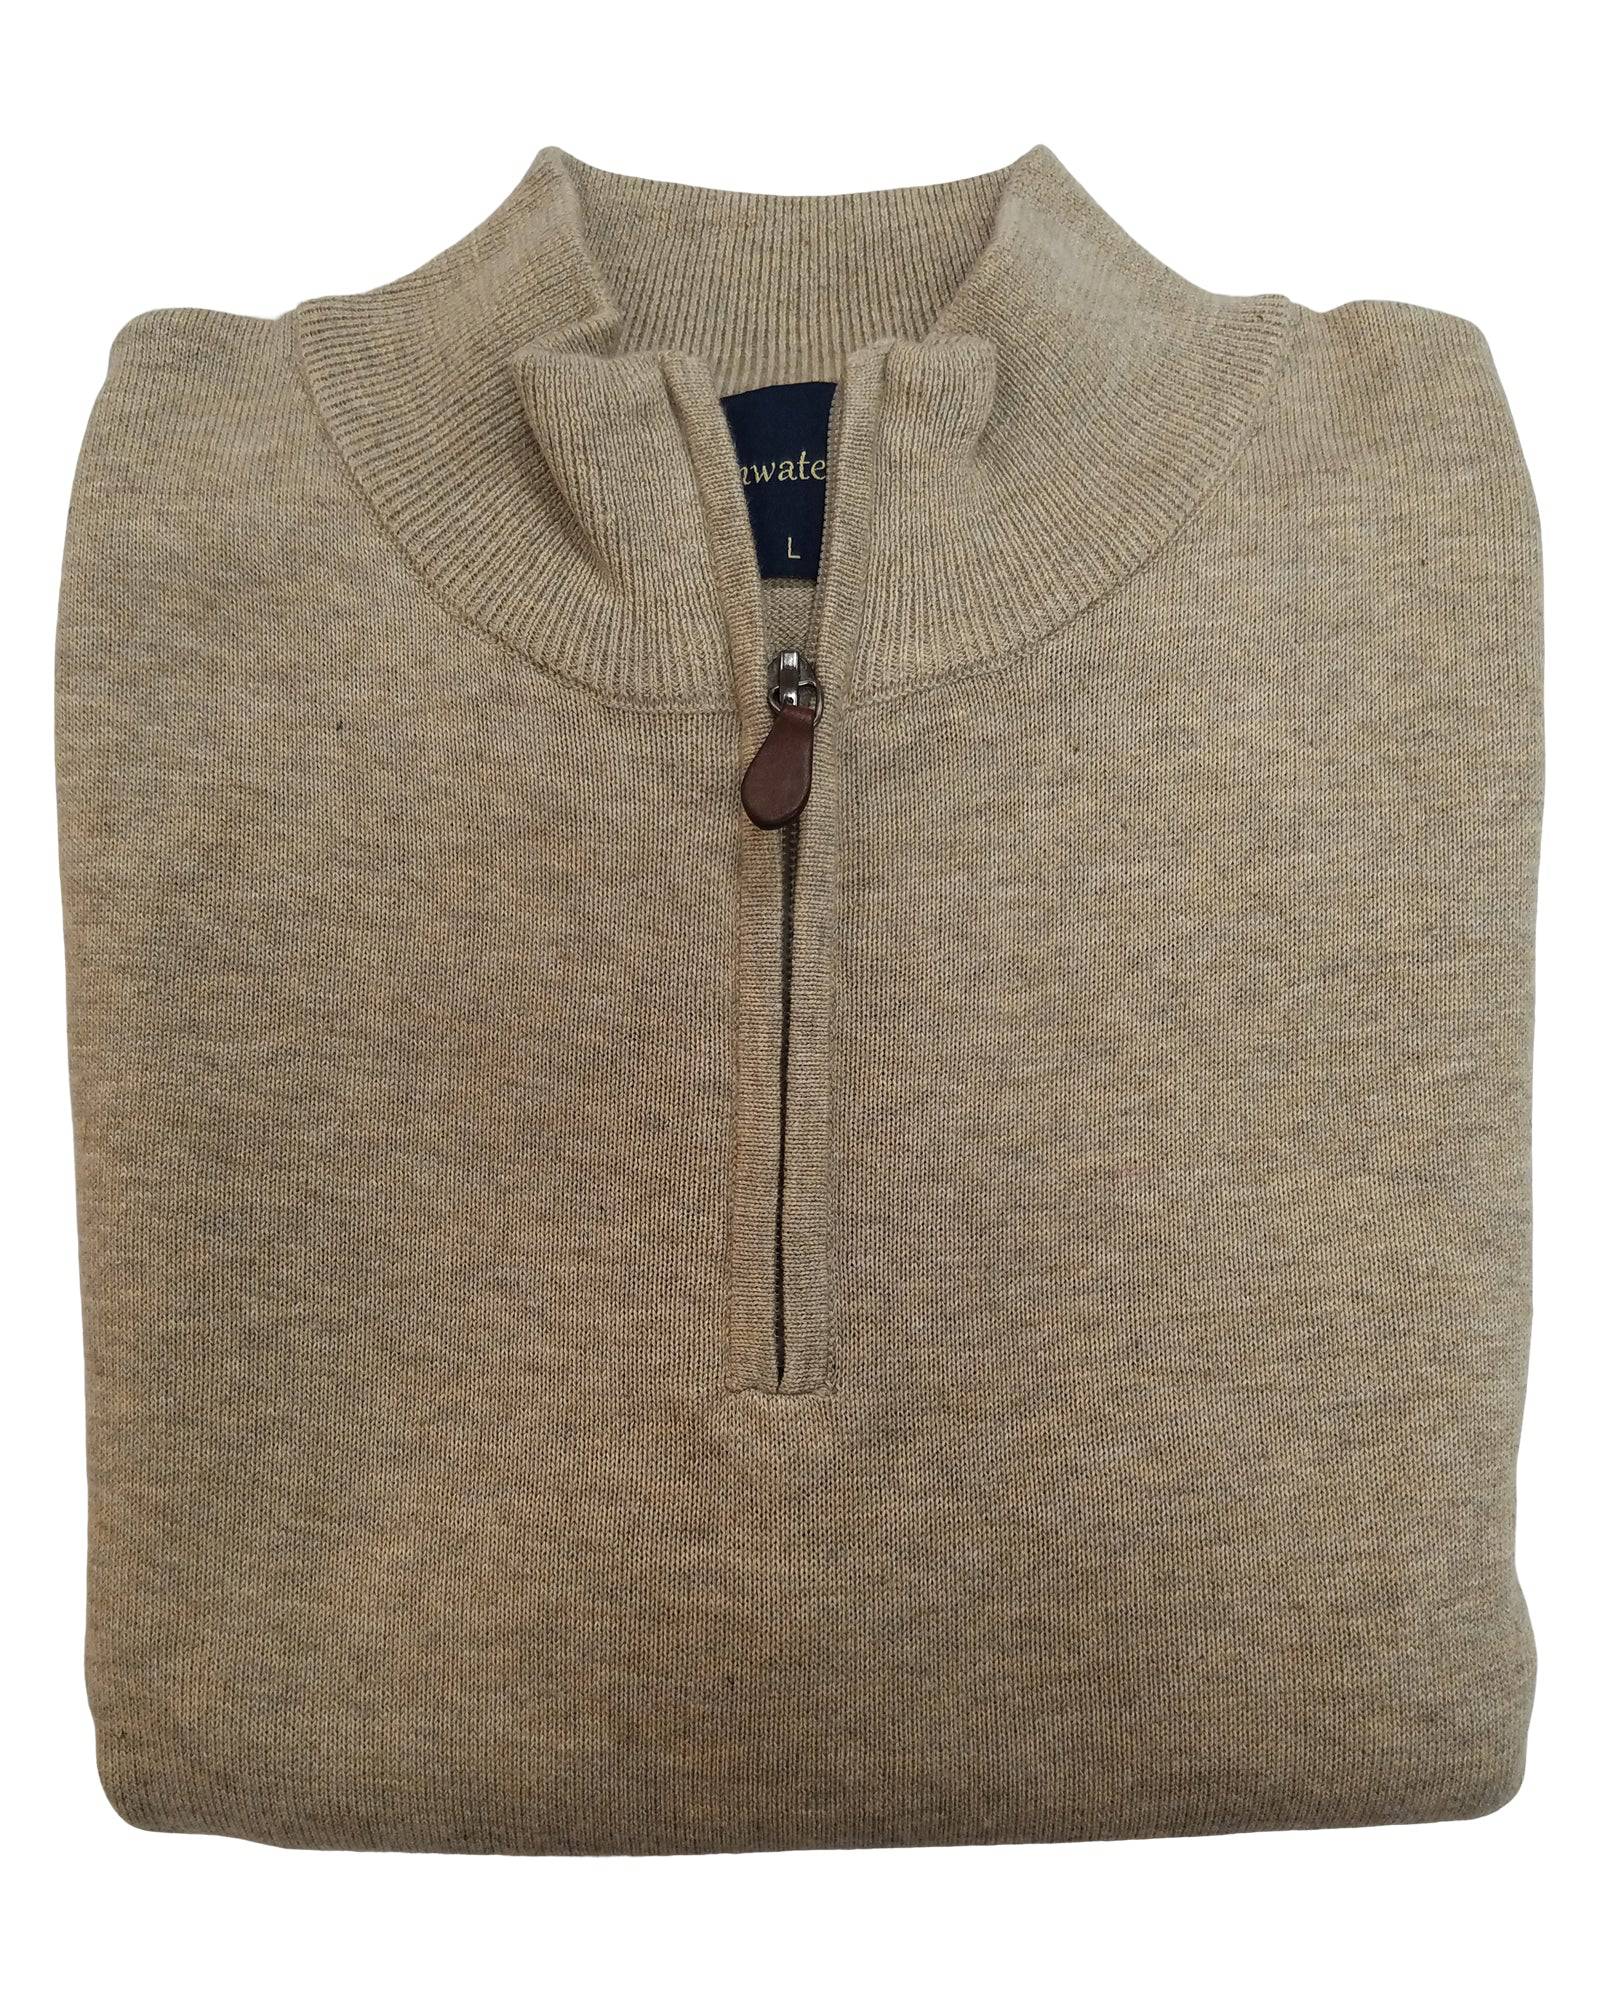 1/4 Zip Mock Sweater in Oatmeal Heather Cotton Blend - Rainwater's Men's Clothing and Tuxedo Rental